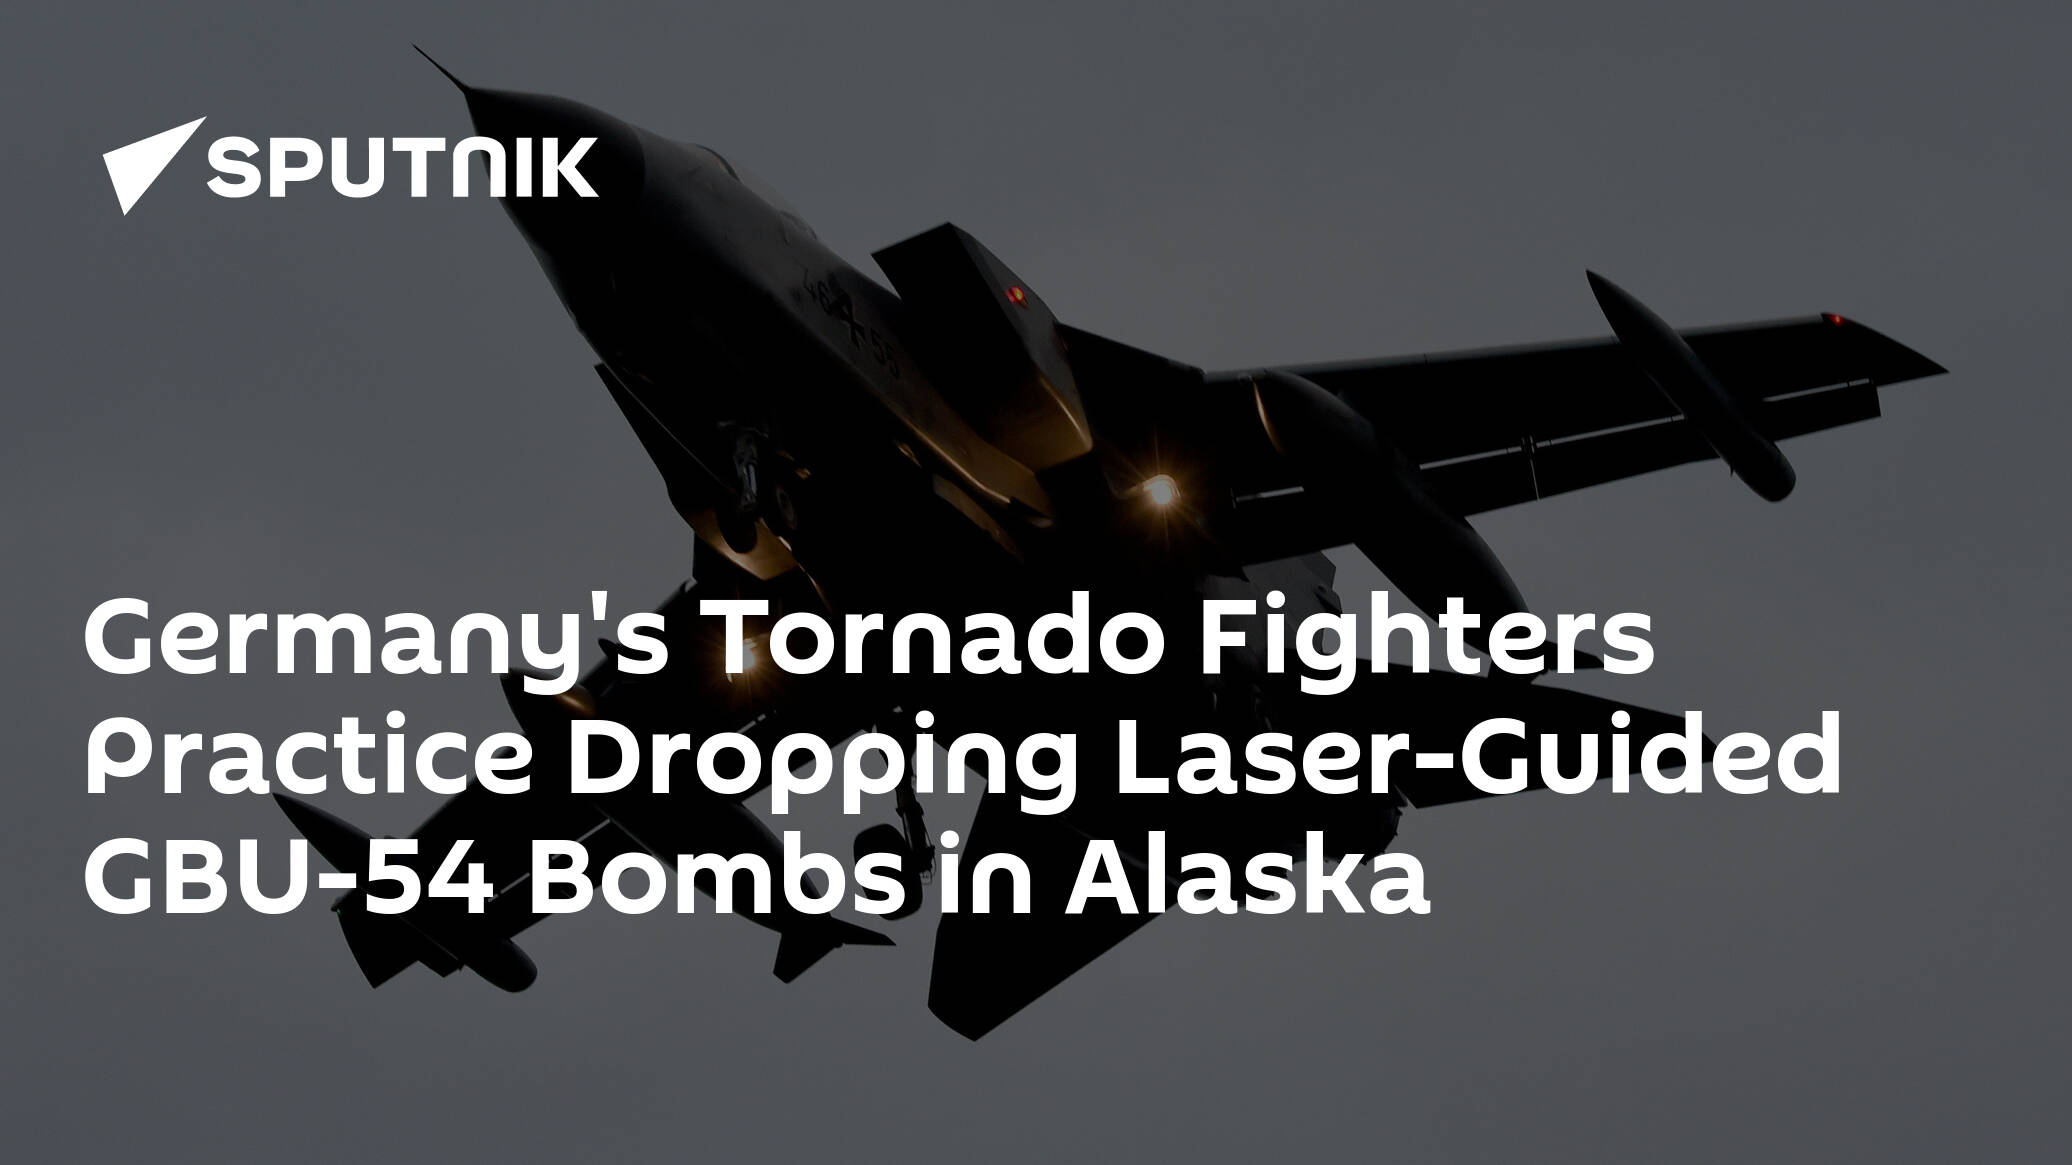 Germany's Tornado Fighters Practice Dropping Laser-Guided GBU-54 Bombs in Alaska